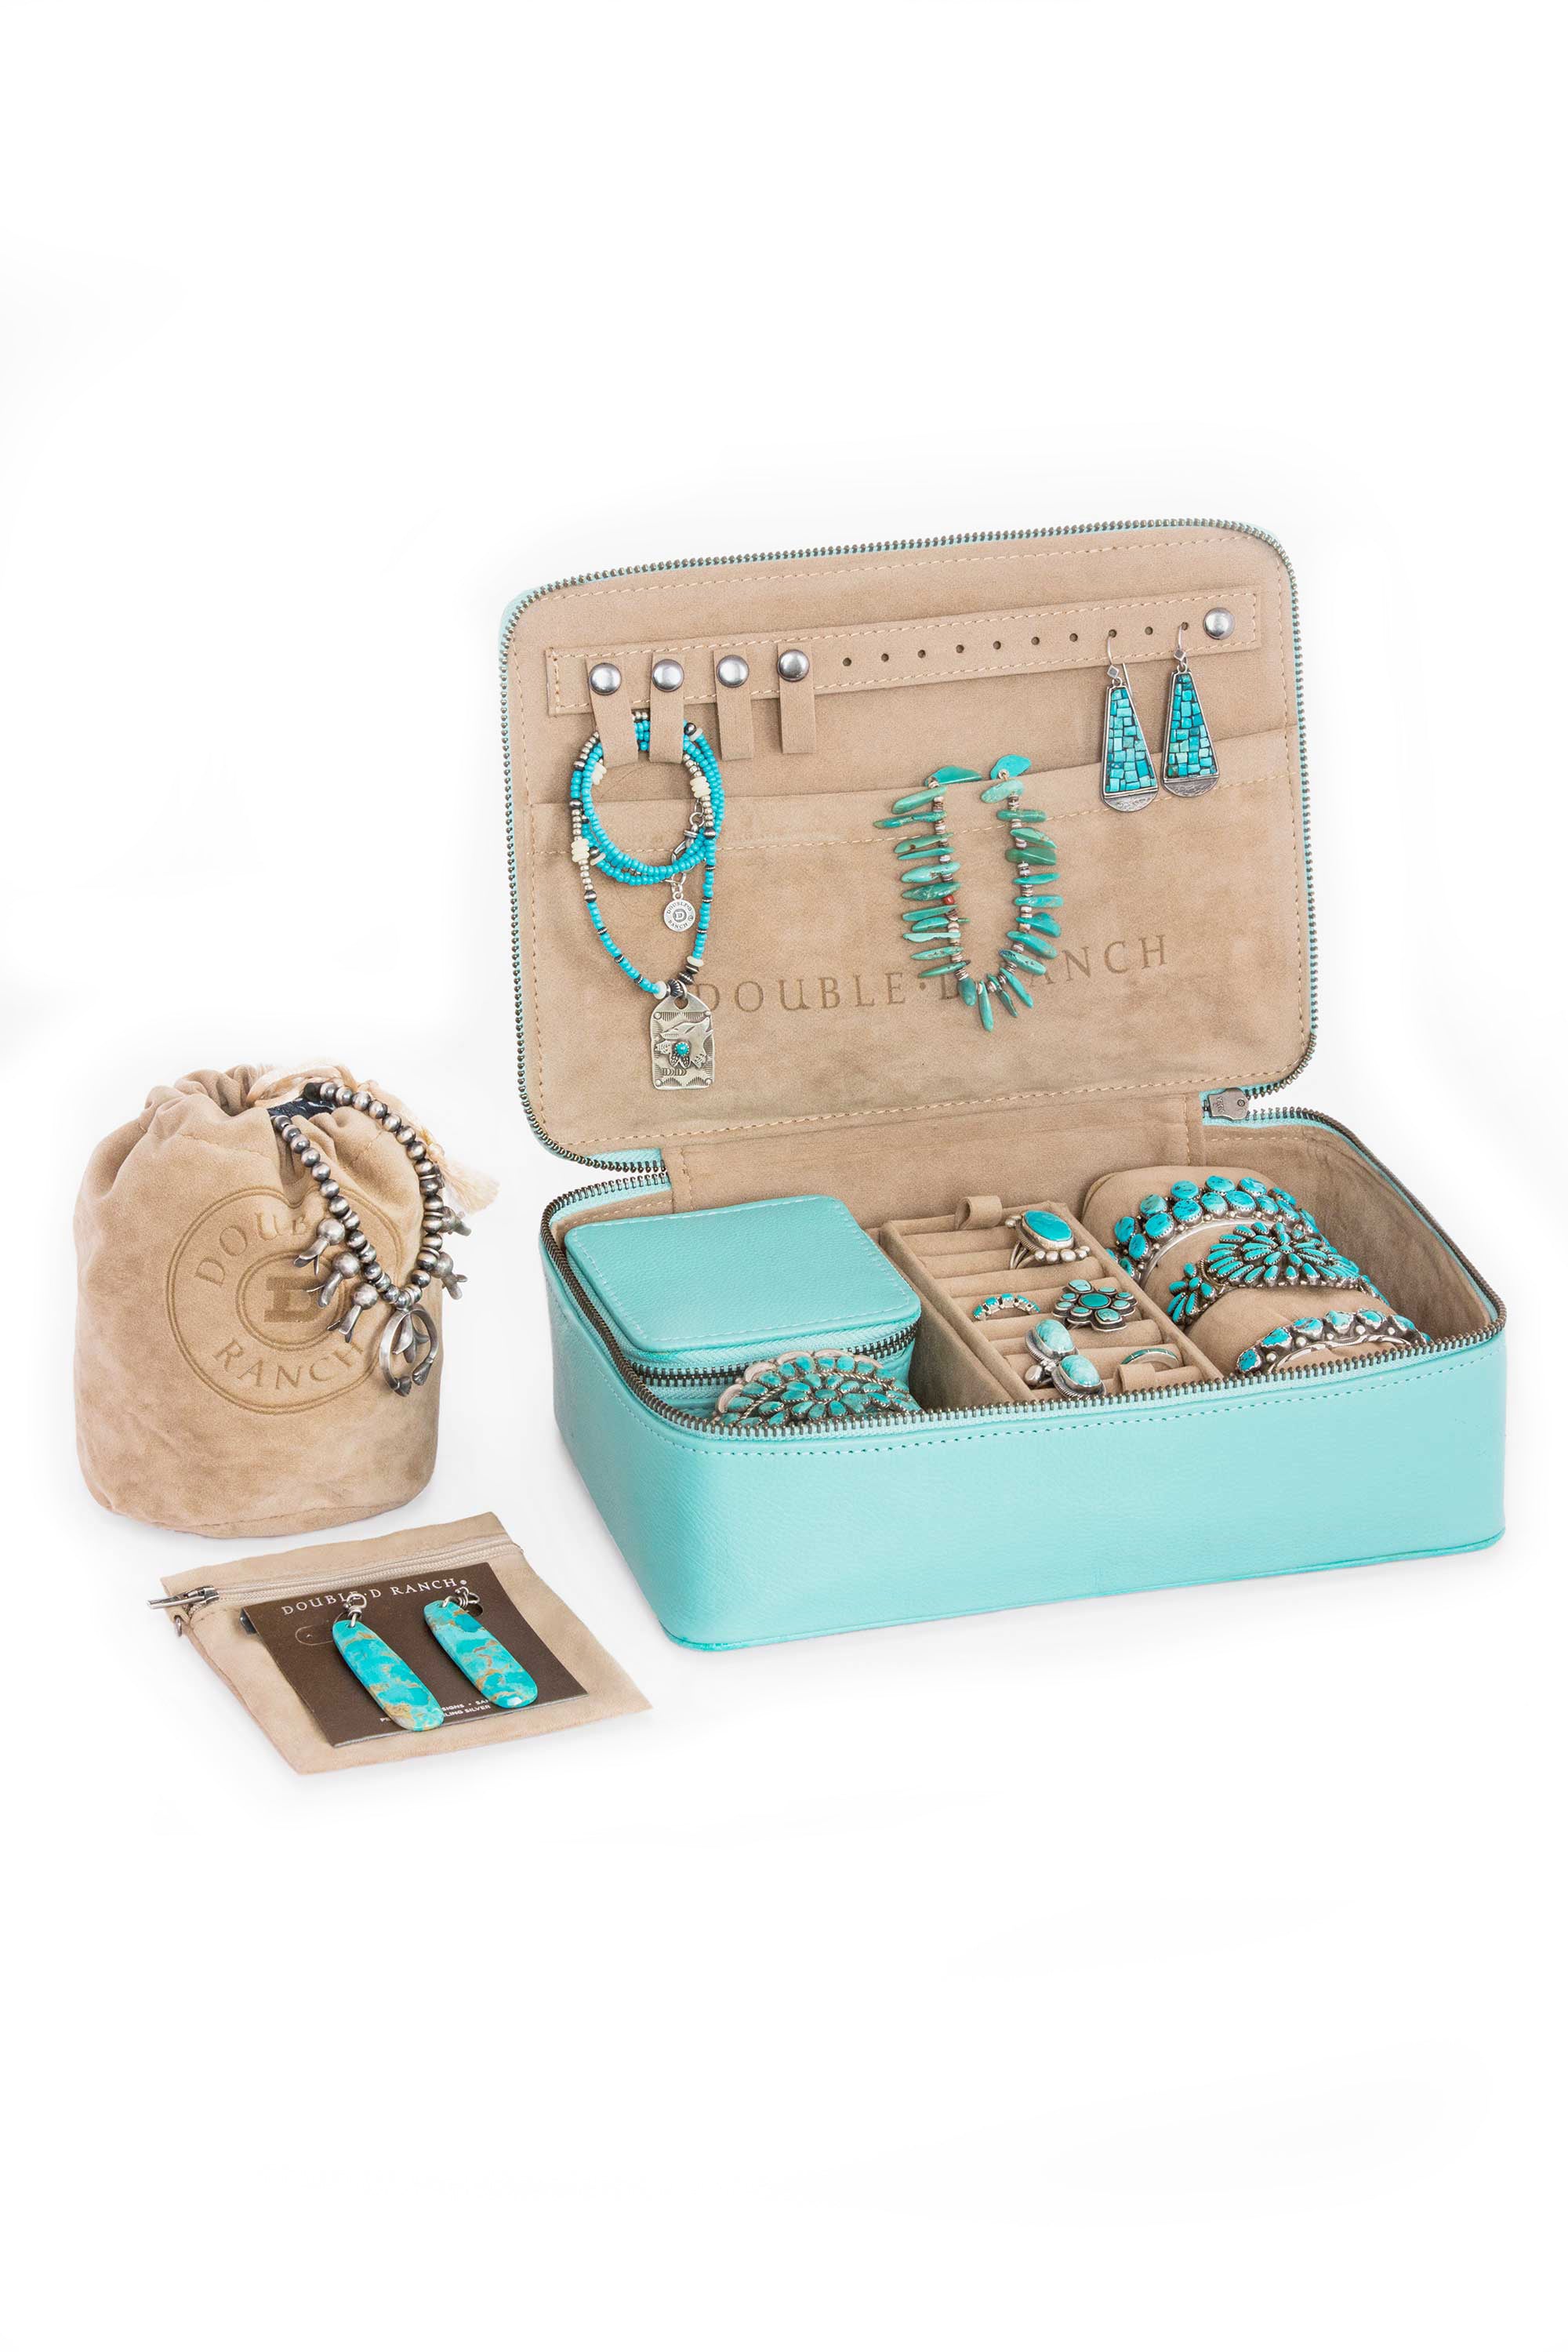 Soft Padded Jewelry Storage Bag | ProCase